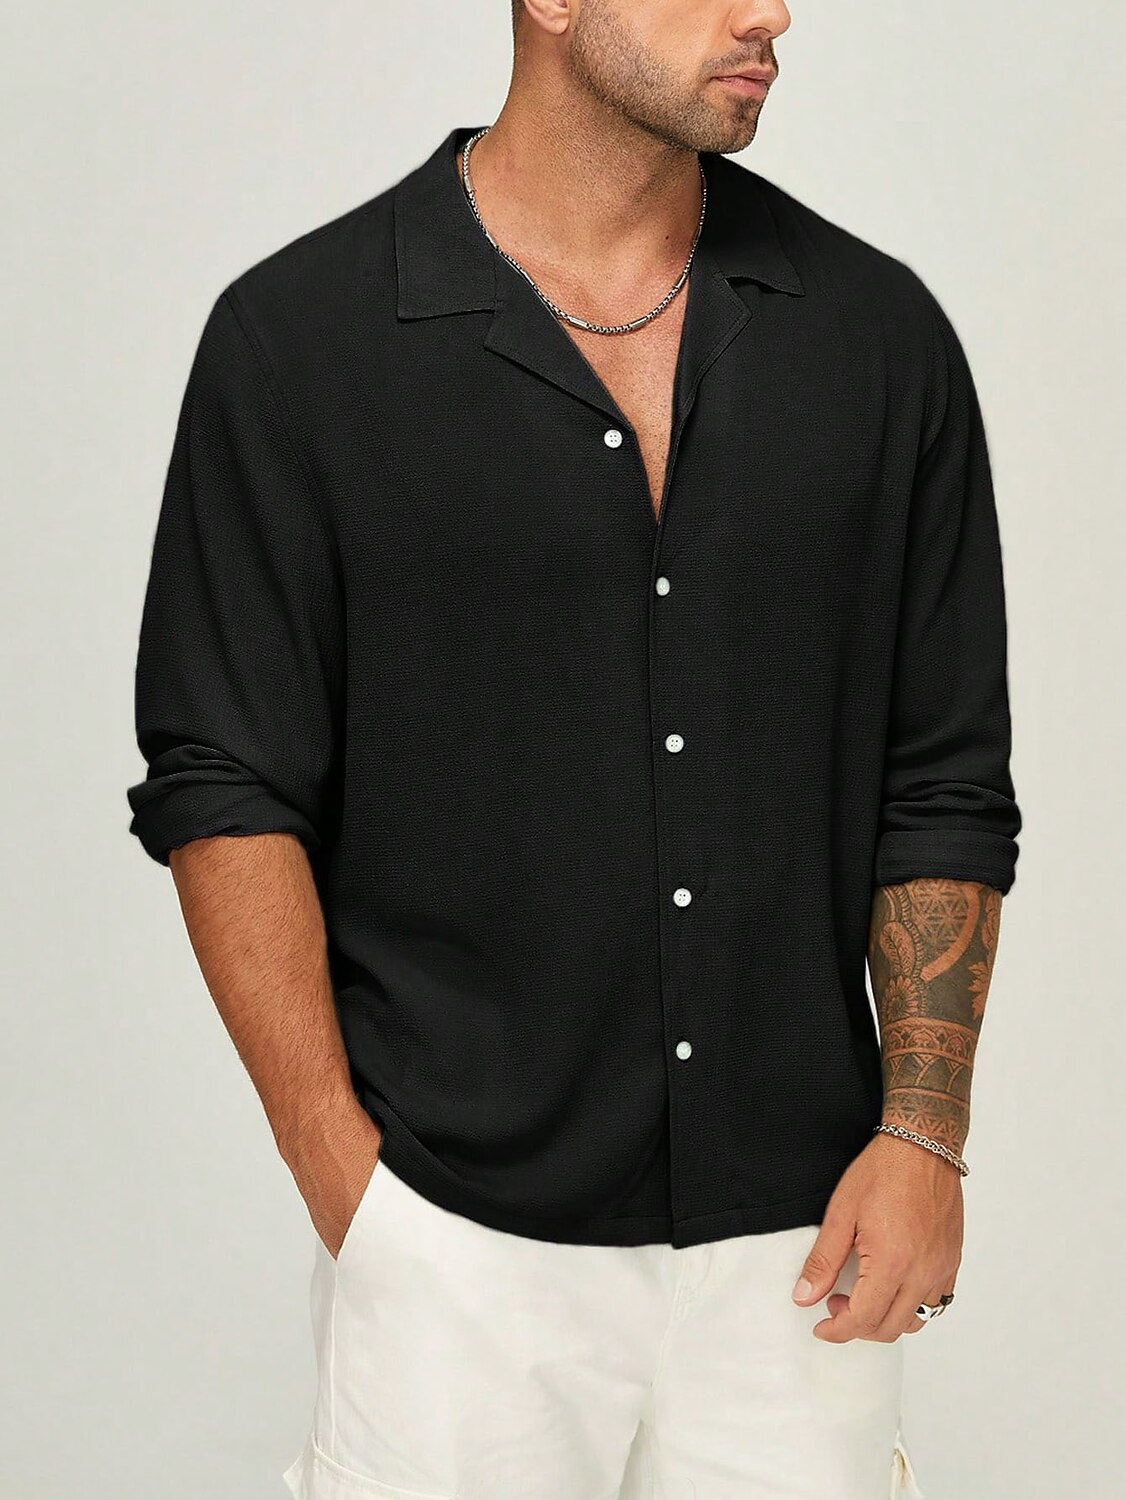 Men's Button Up Shirt  Casual Shirt Long Sleeve Plain Camp Collar Daily Vacation Casual Comfortable Shirt 